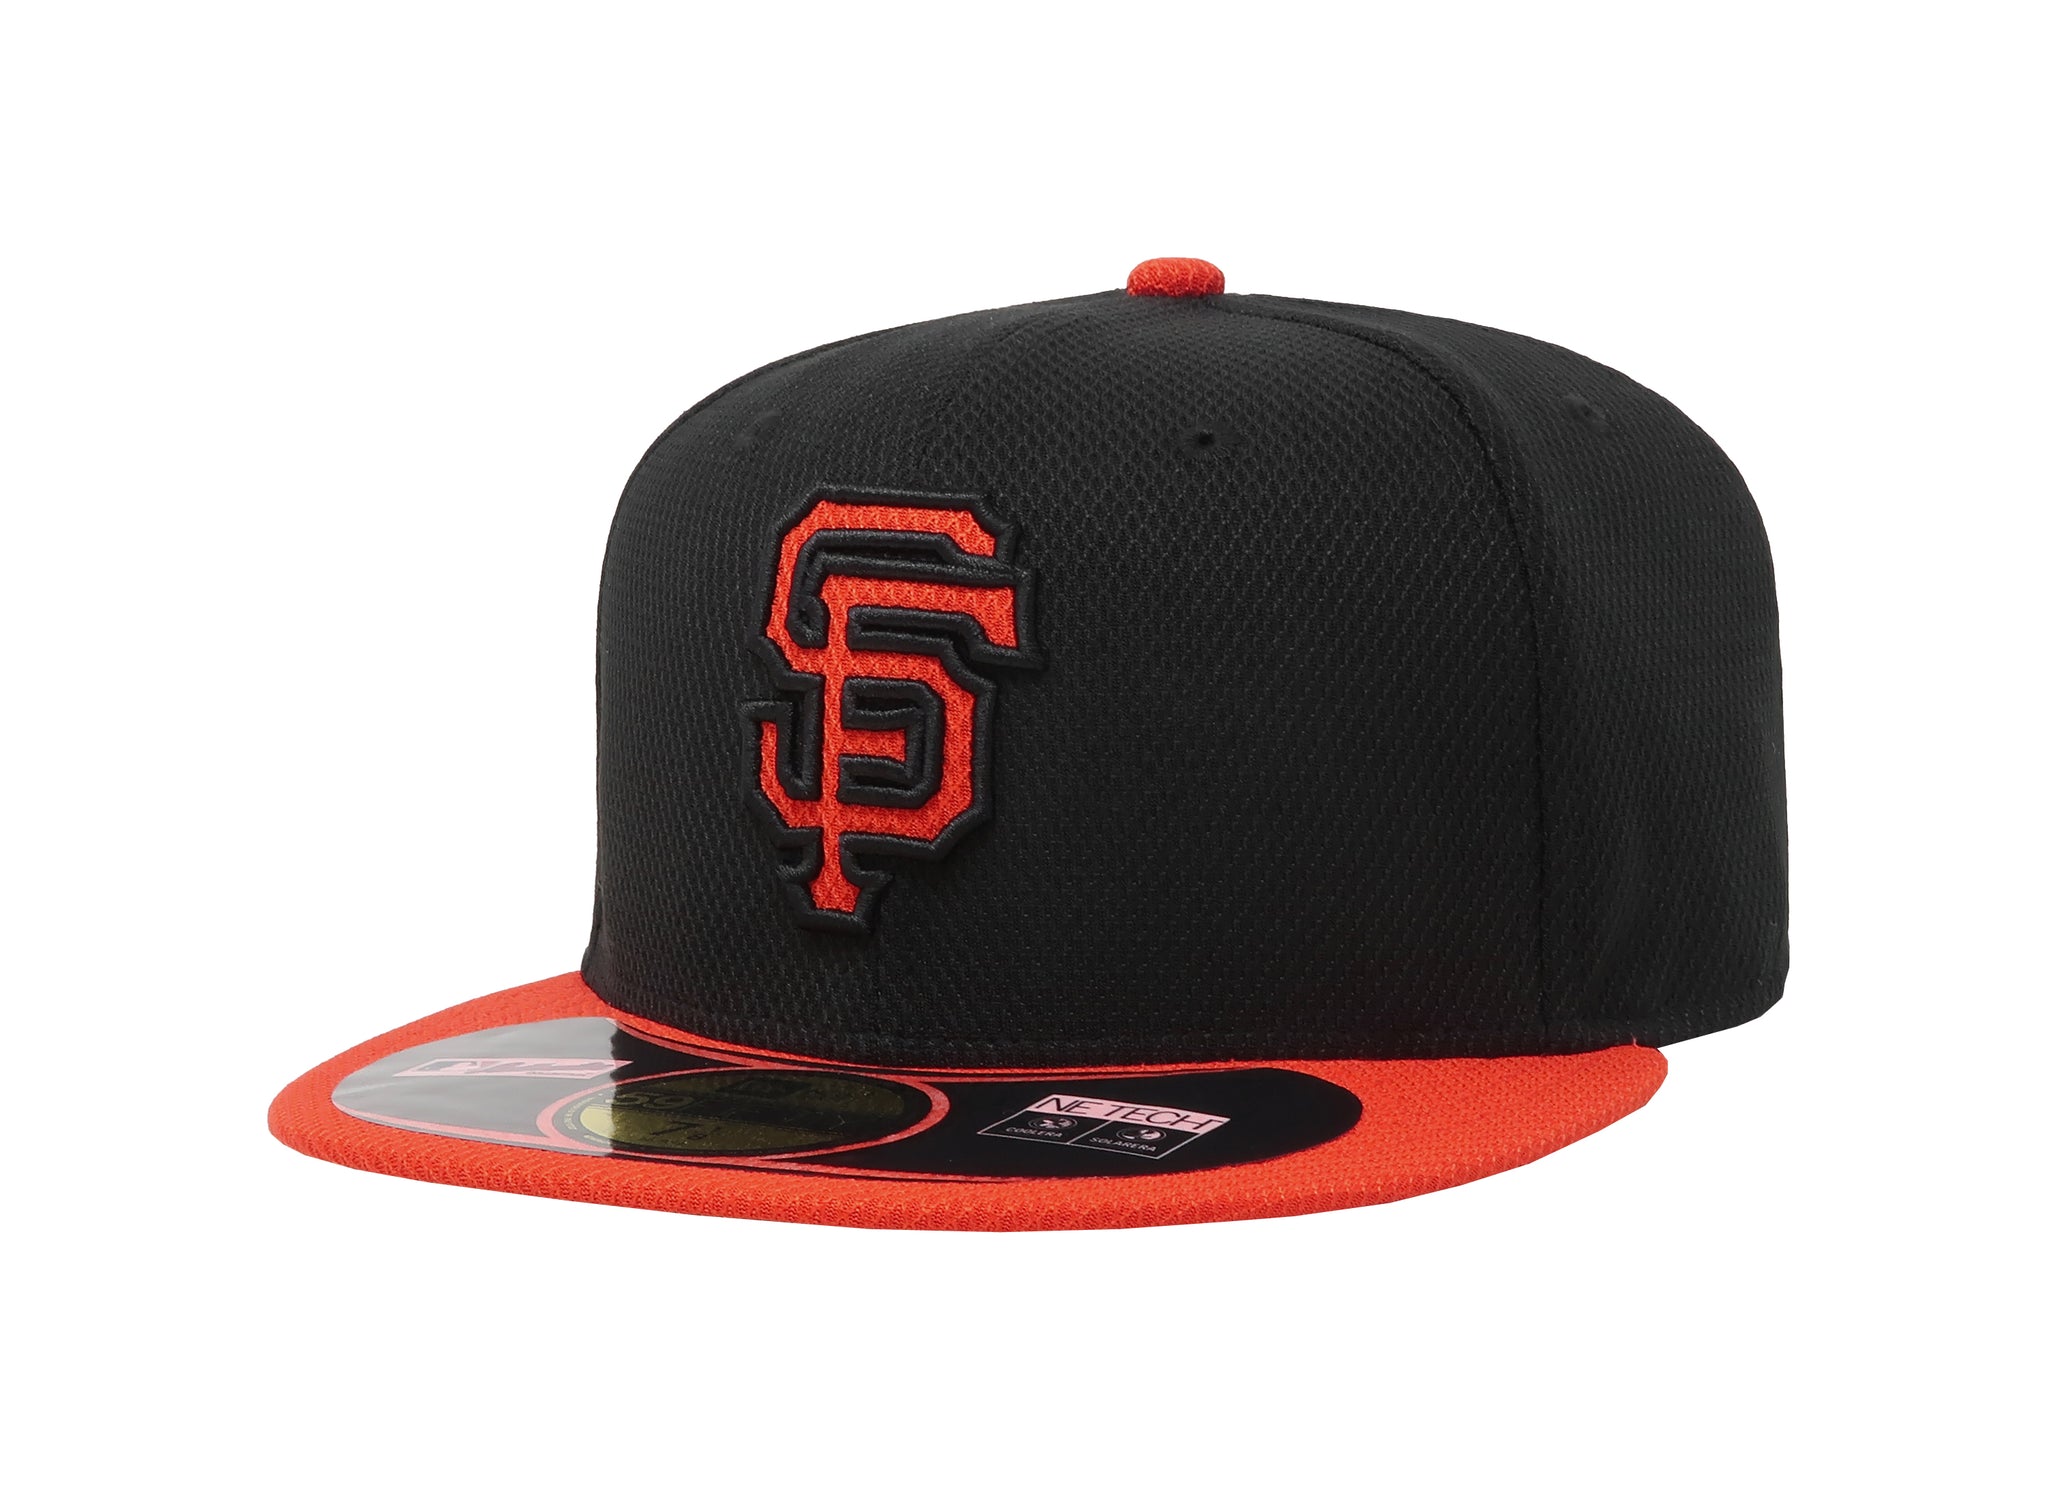 New Era 59Fifty Men's San Francisco Giants Diamond Era Black/Orange Fitted Cap